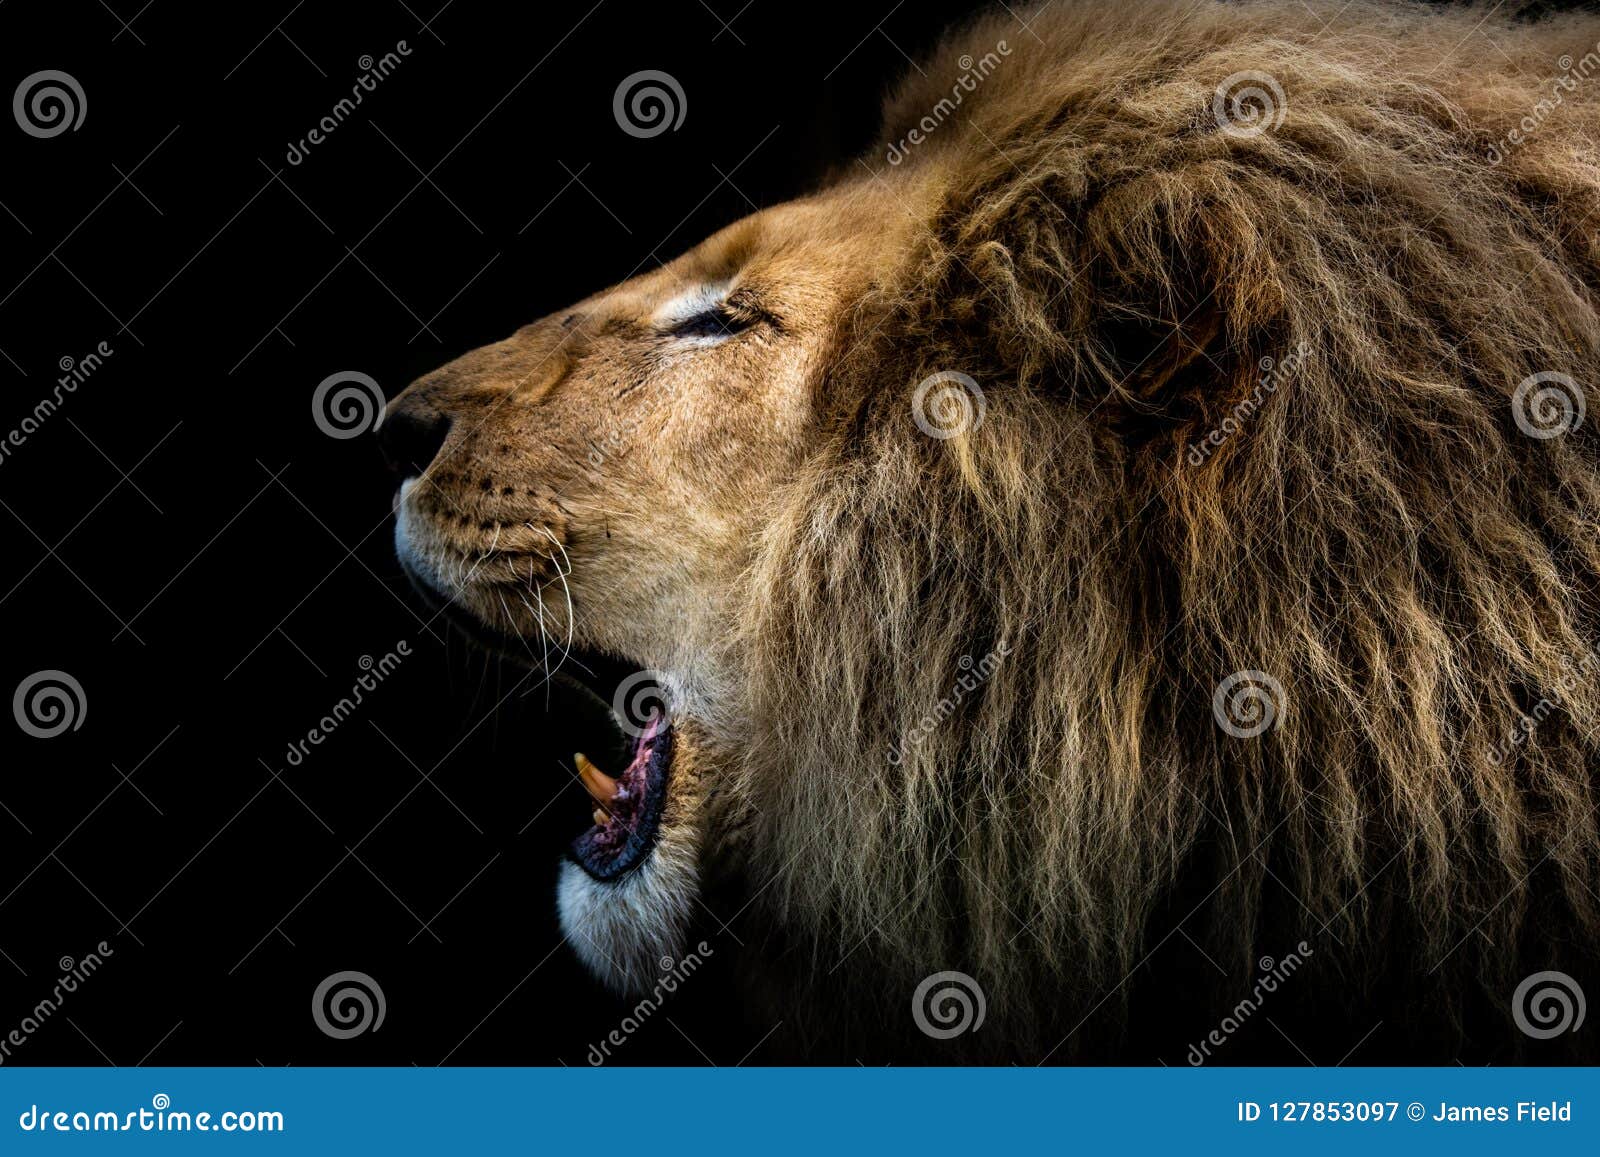 Roaring Lion Side on Shot Against a Black Background Stock Image ...